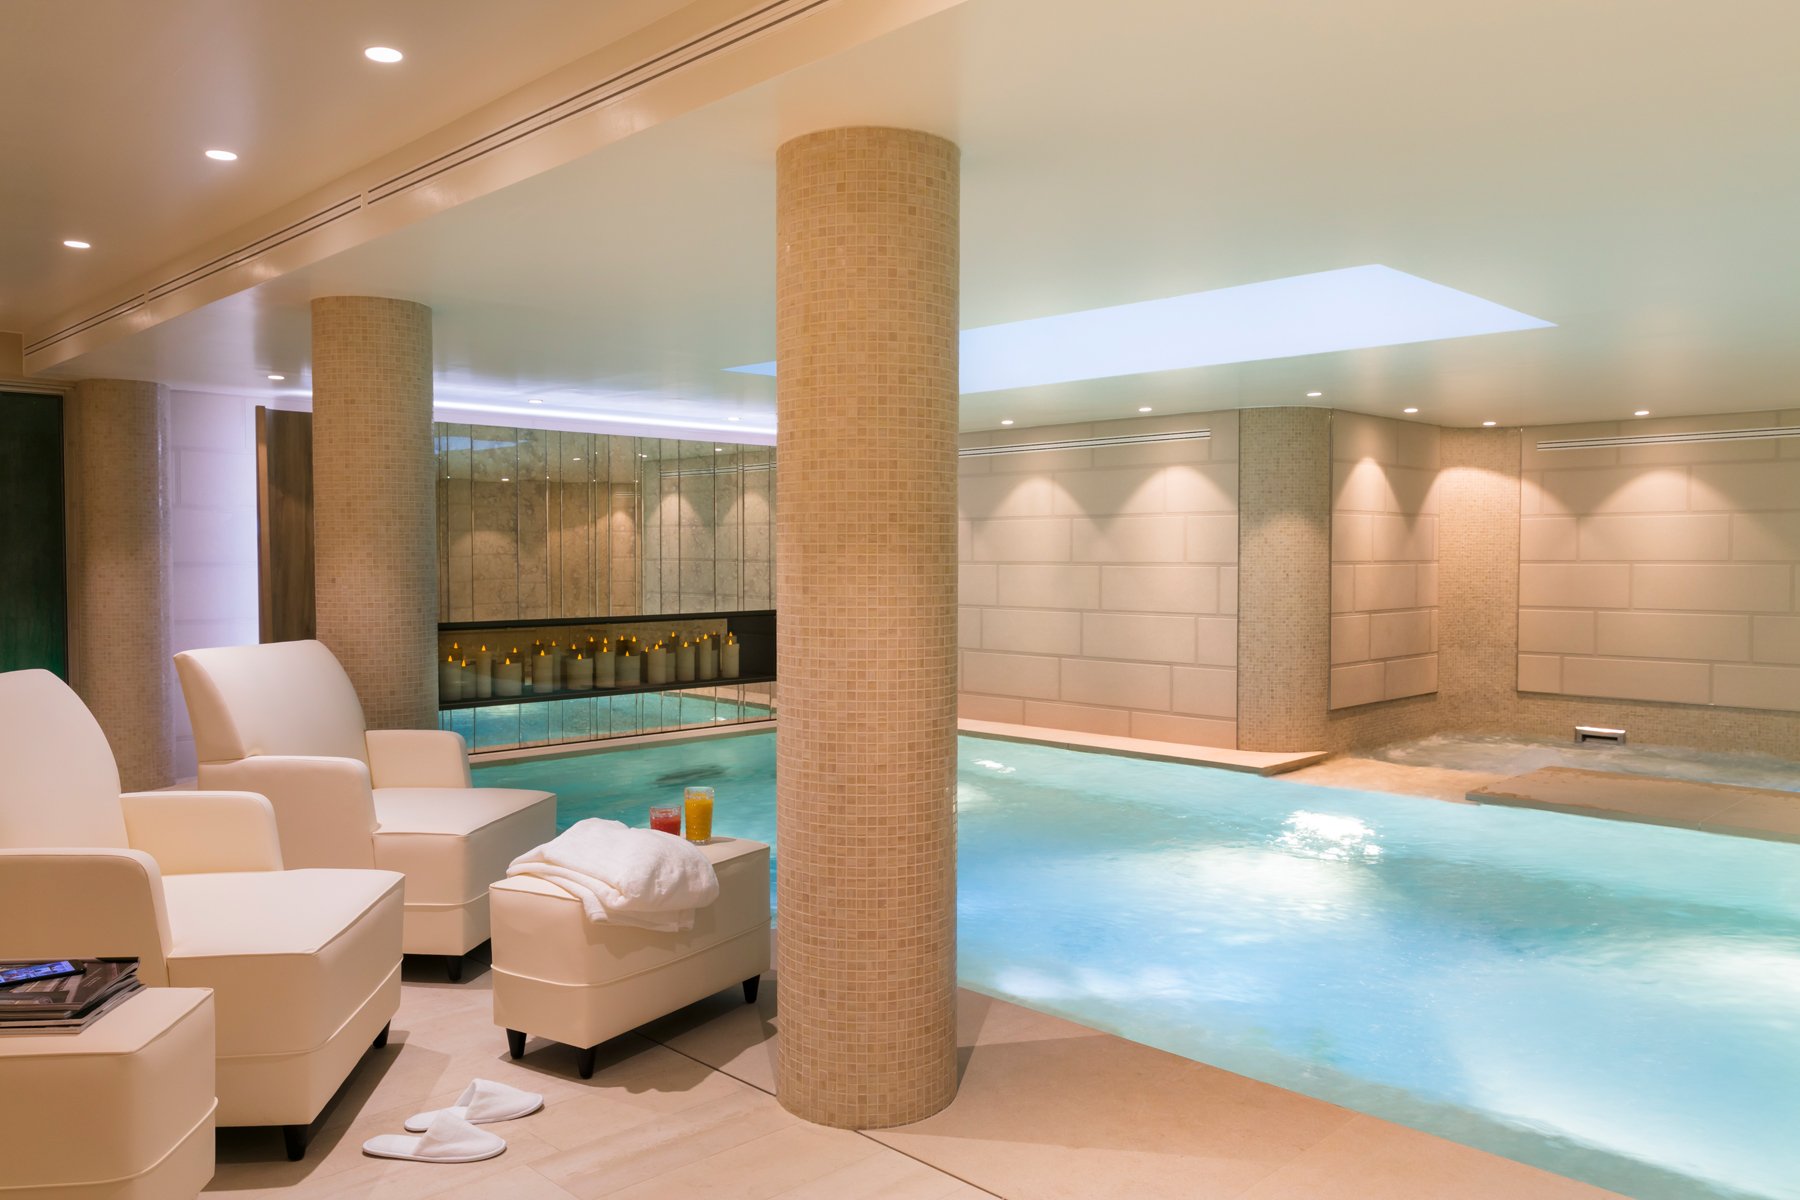 Maison Albar Hotels piscina cubierta spa